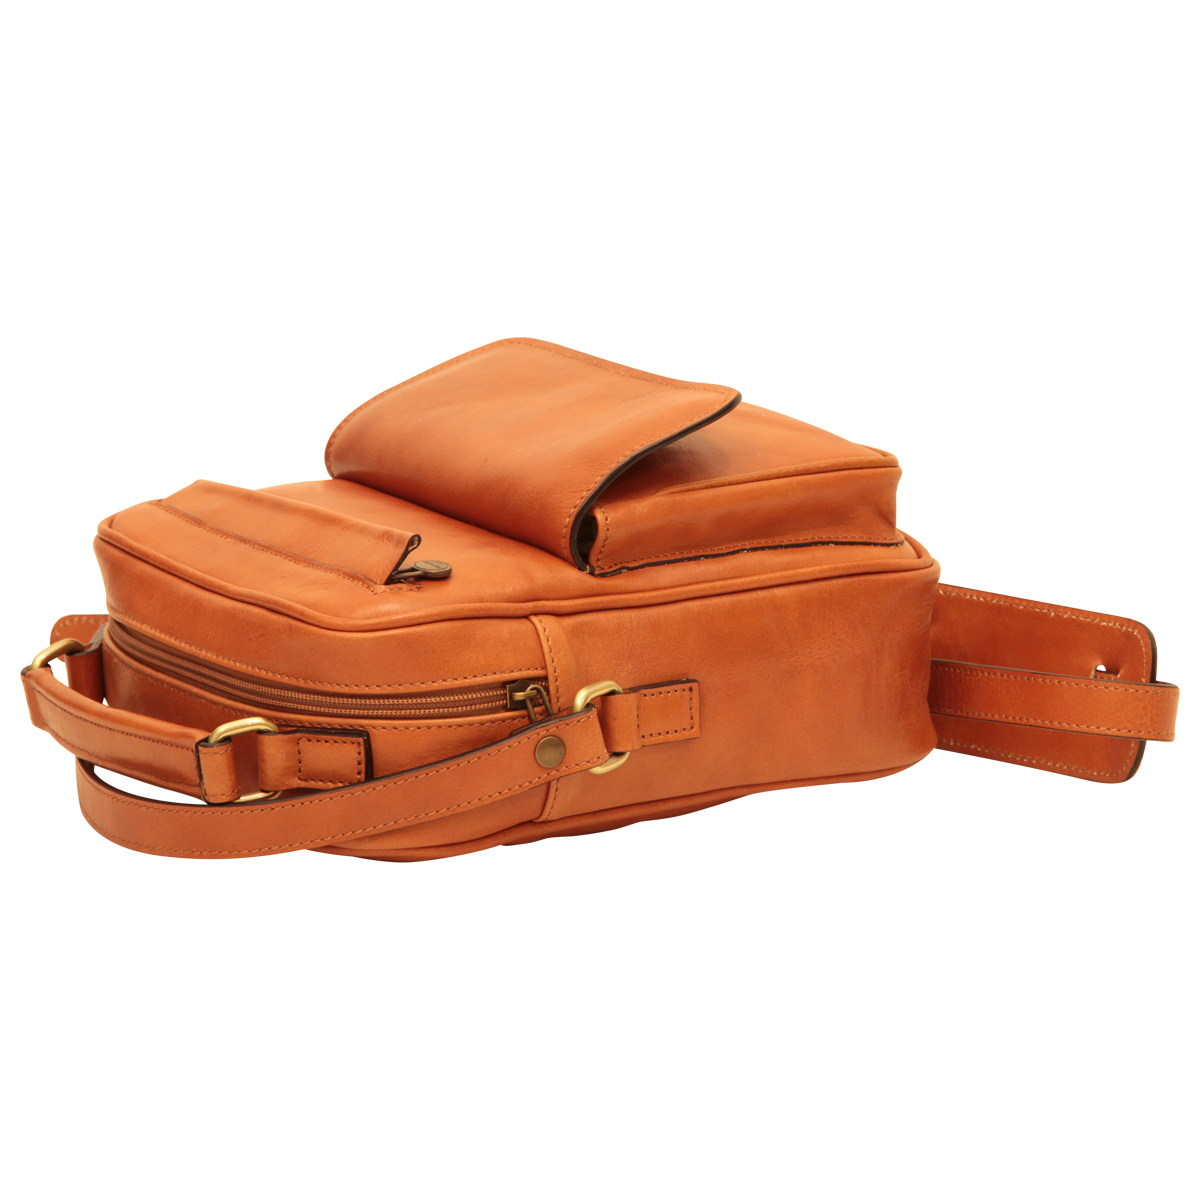 Leather Shoulder Bag with front pocket - Brown Colonial  | 056489CO UK | Old Angler Firenze